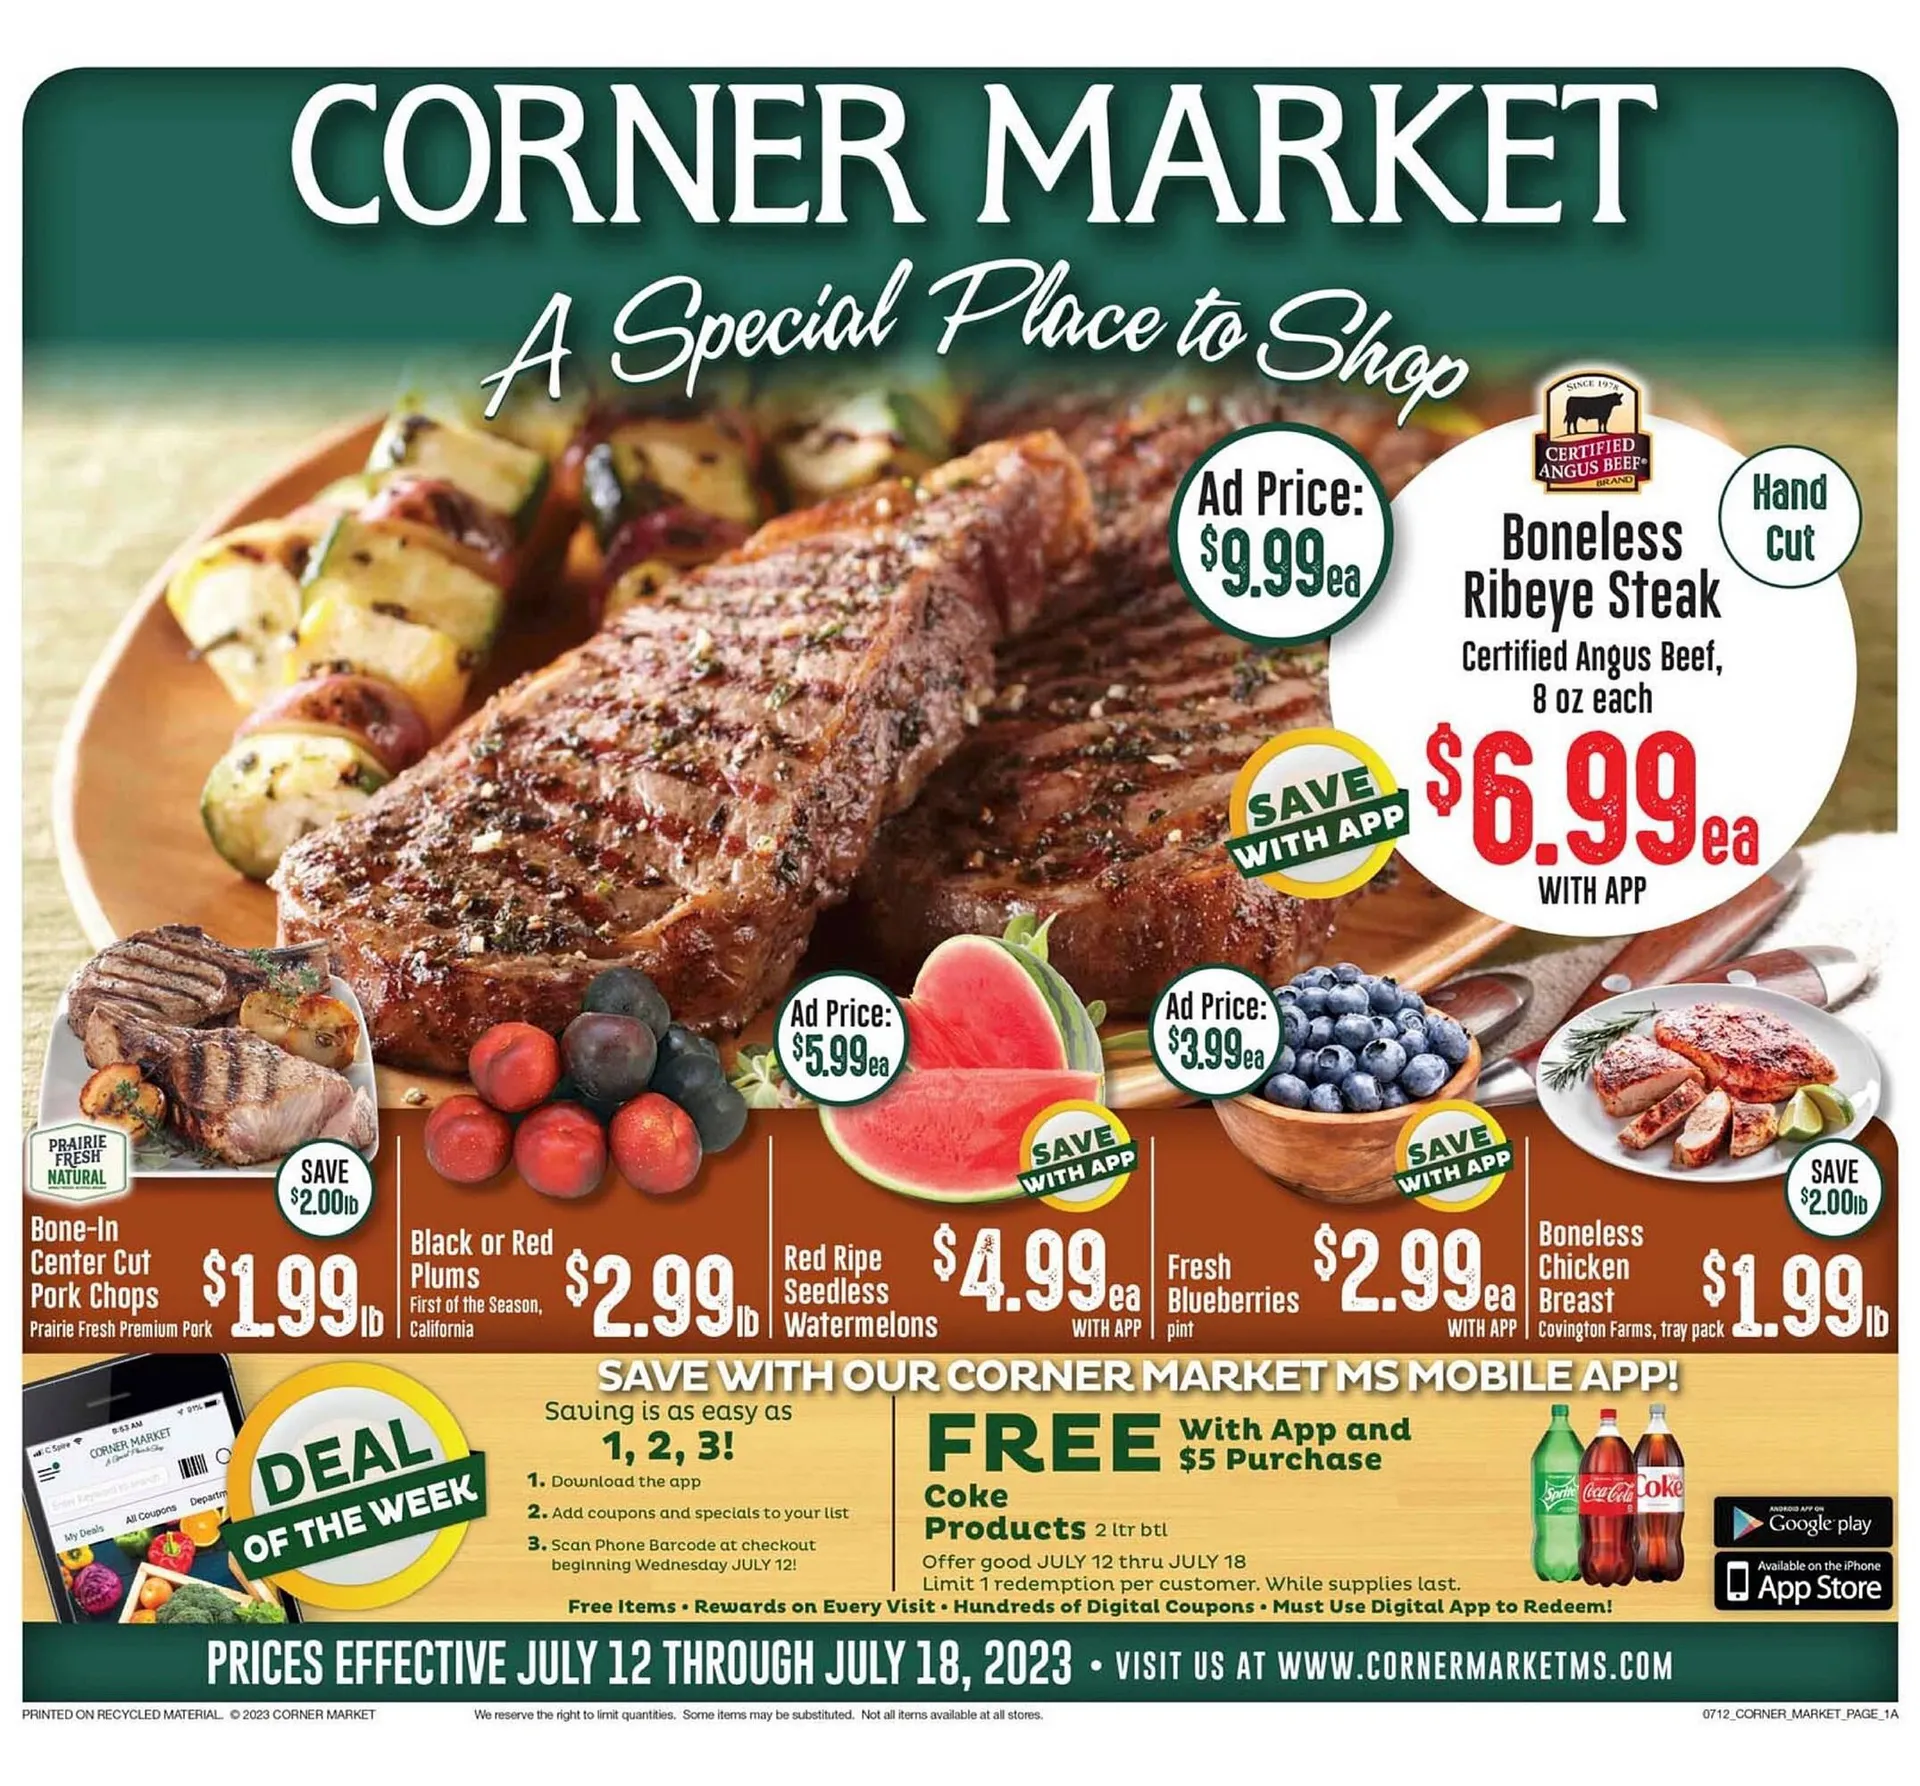 Corner Market ad - 1